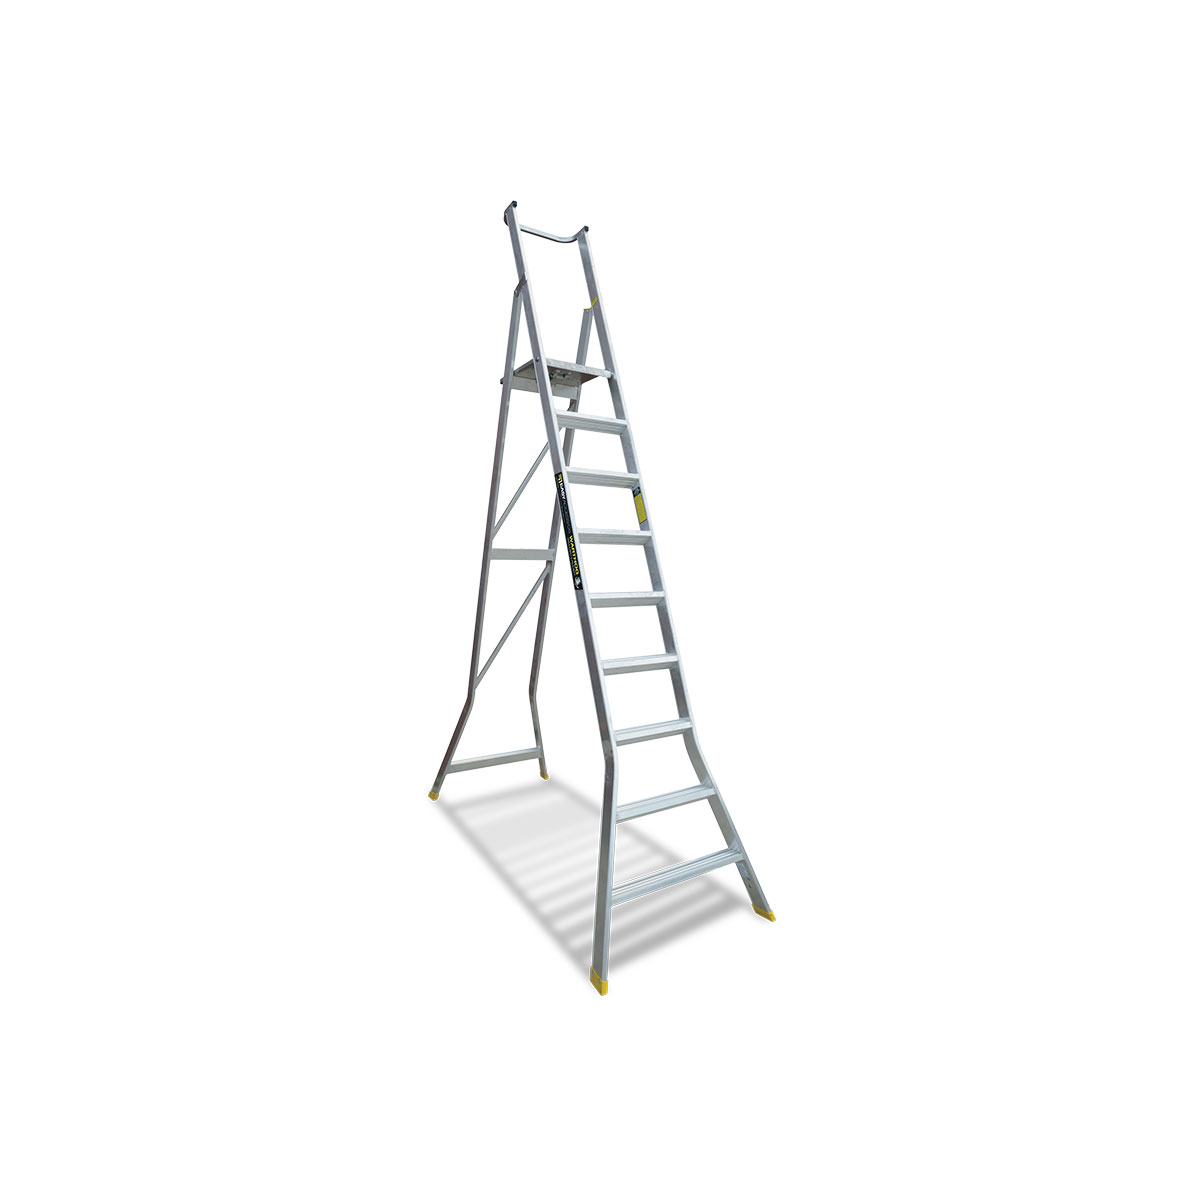 Work Platform Ladder Heavy Duty Warehouse Use